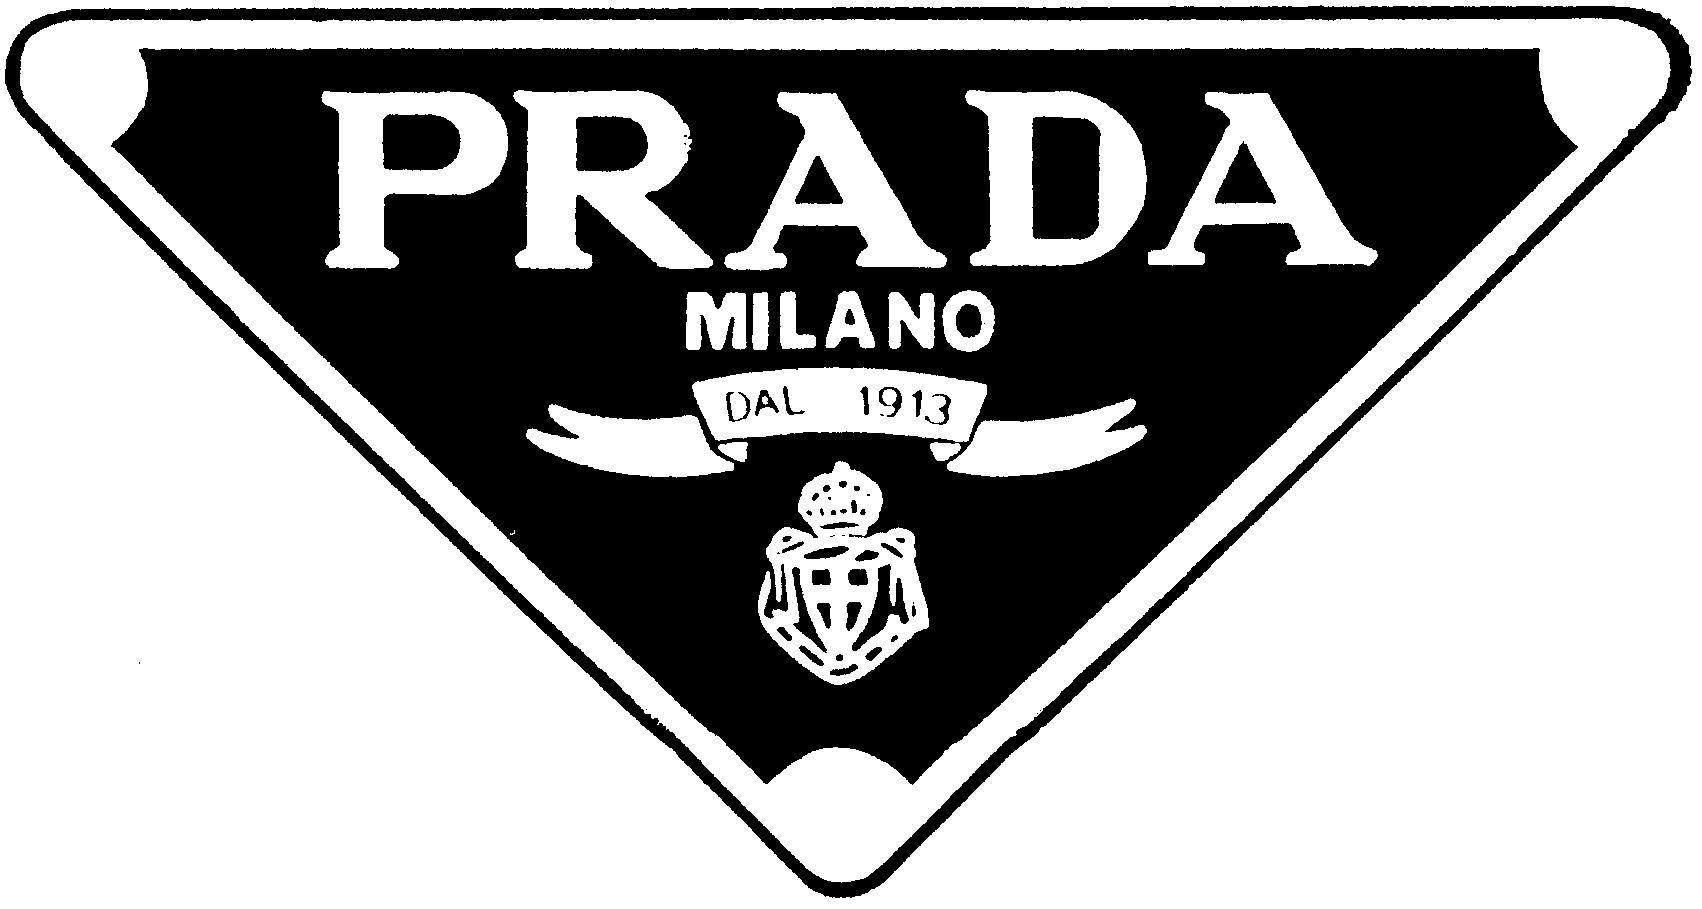 PRADA MILANO DAL 1913 - Prada . Trademark Registration